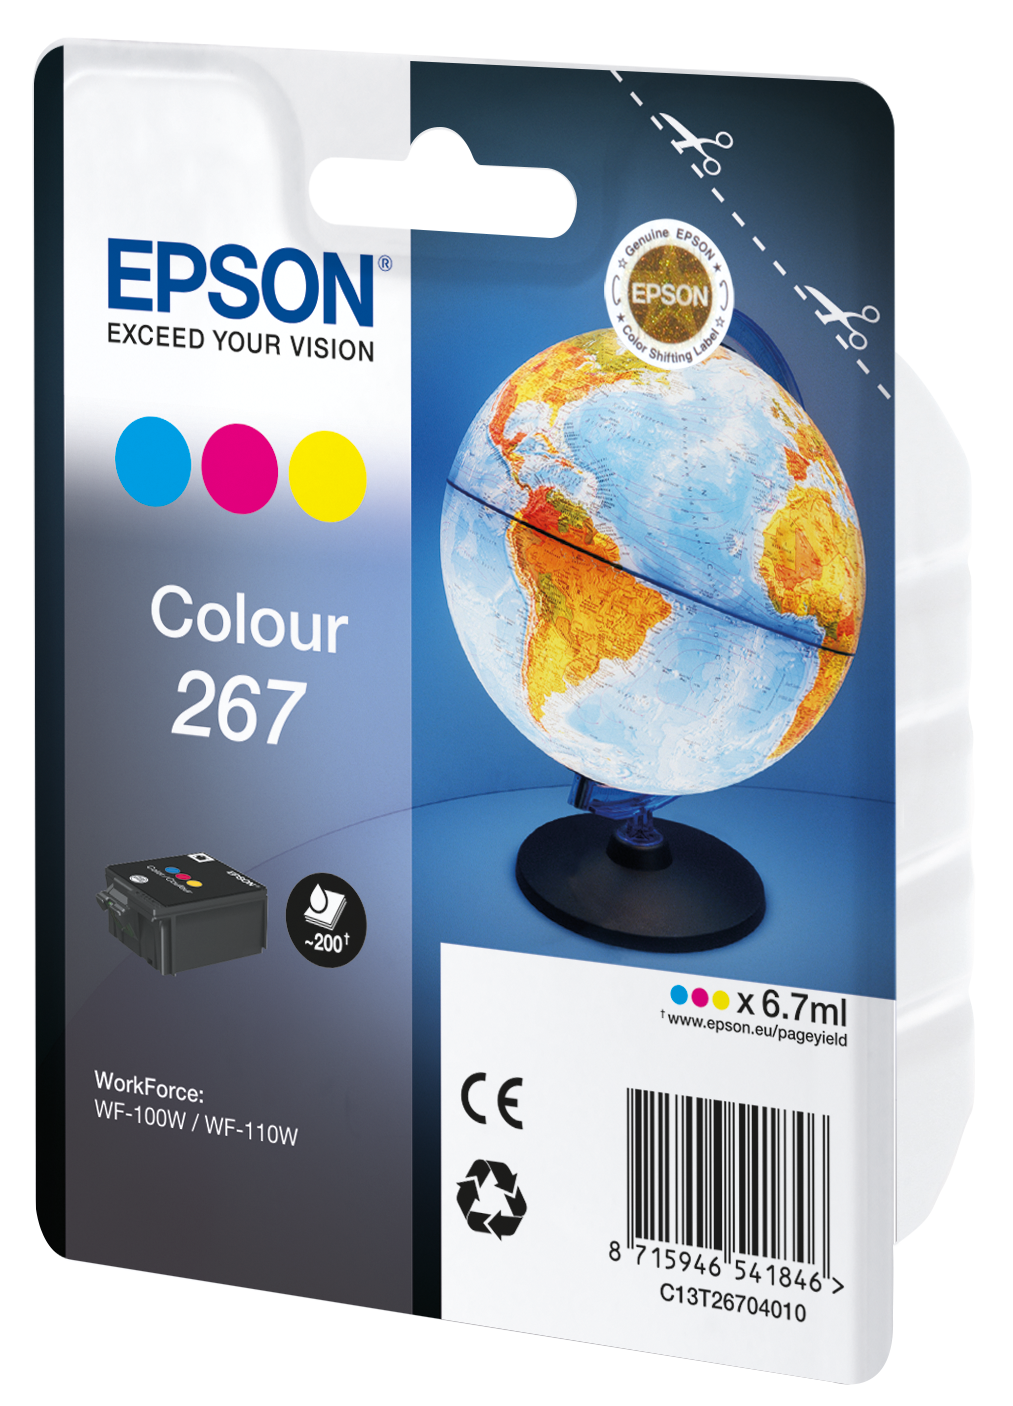 Epson Workforce WF110W Impresora Portatil Color WiFi 14ppm - Nucleo Digital